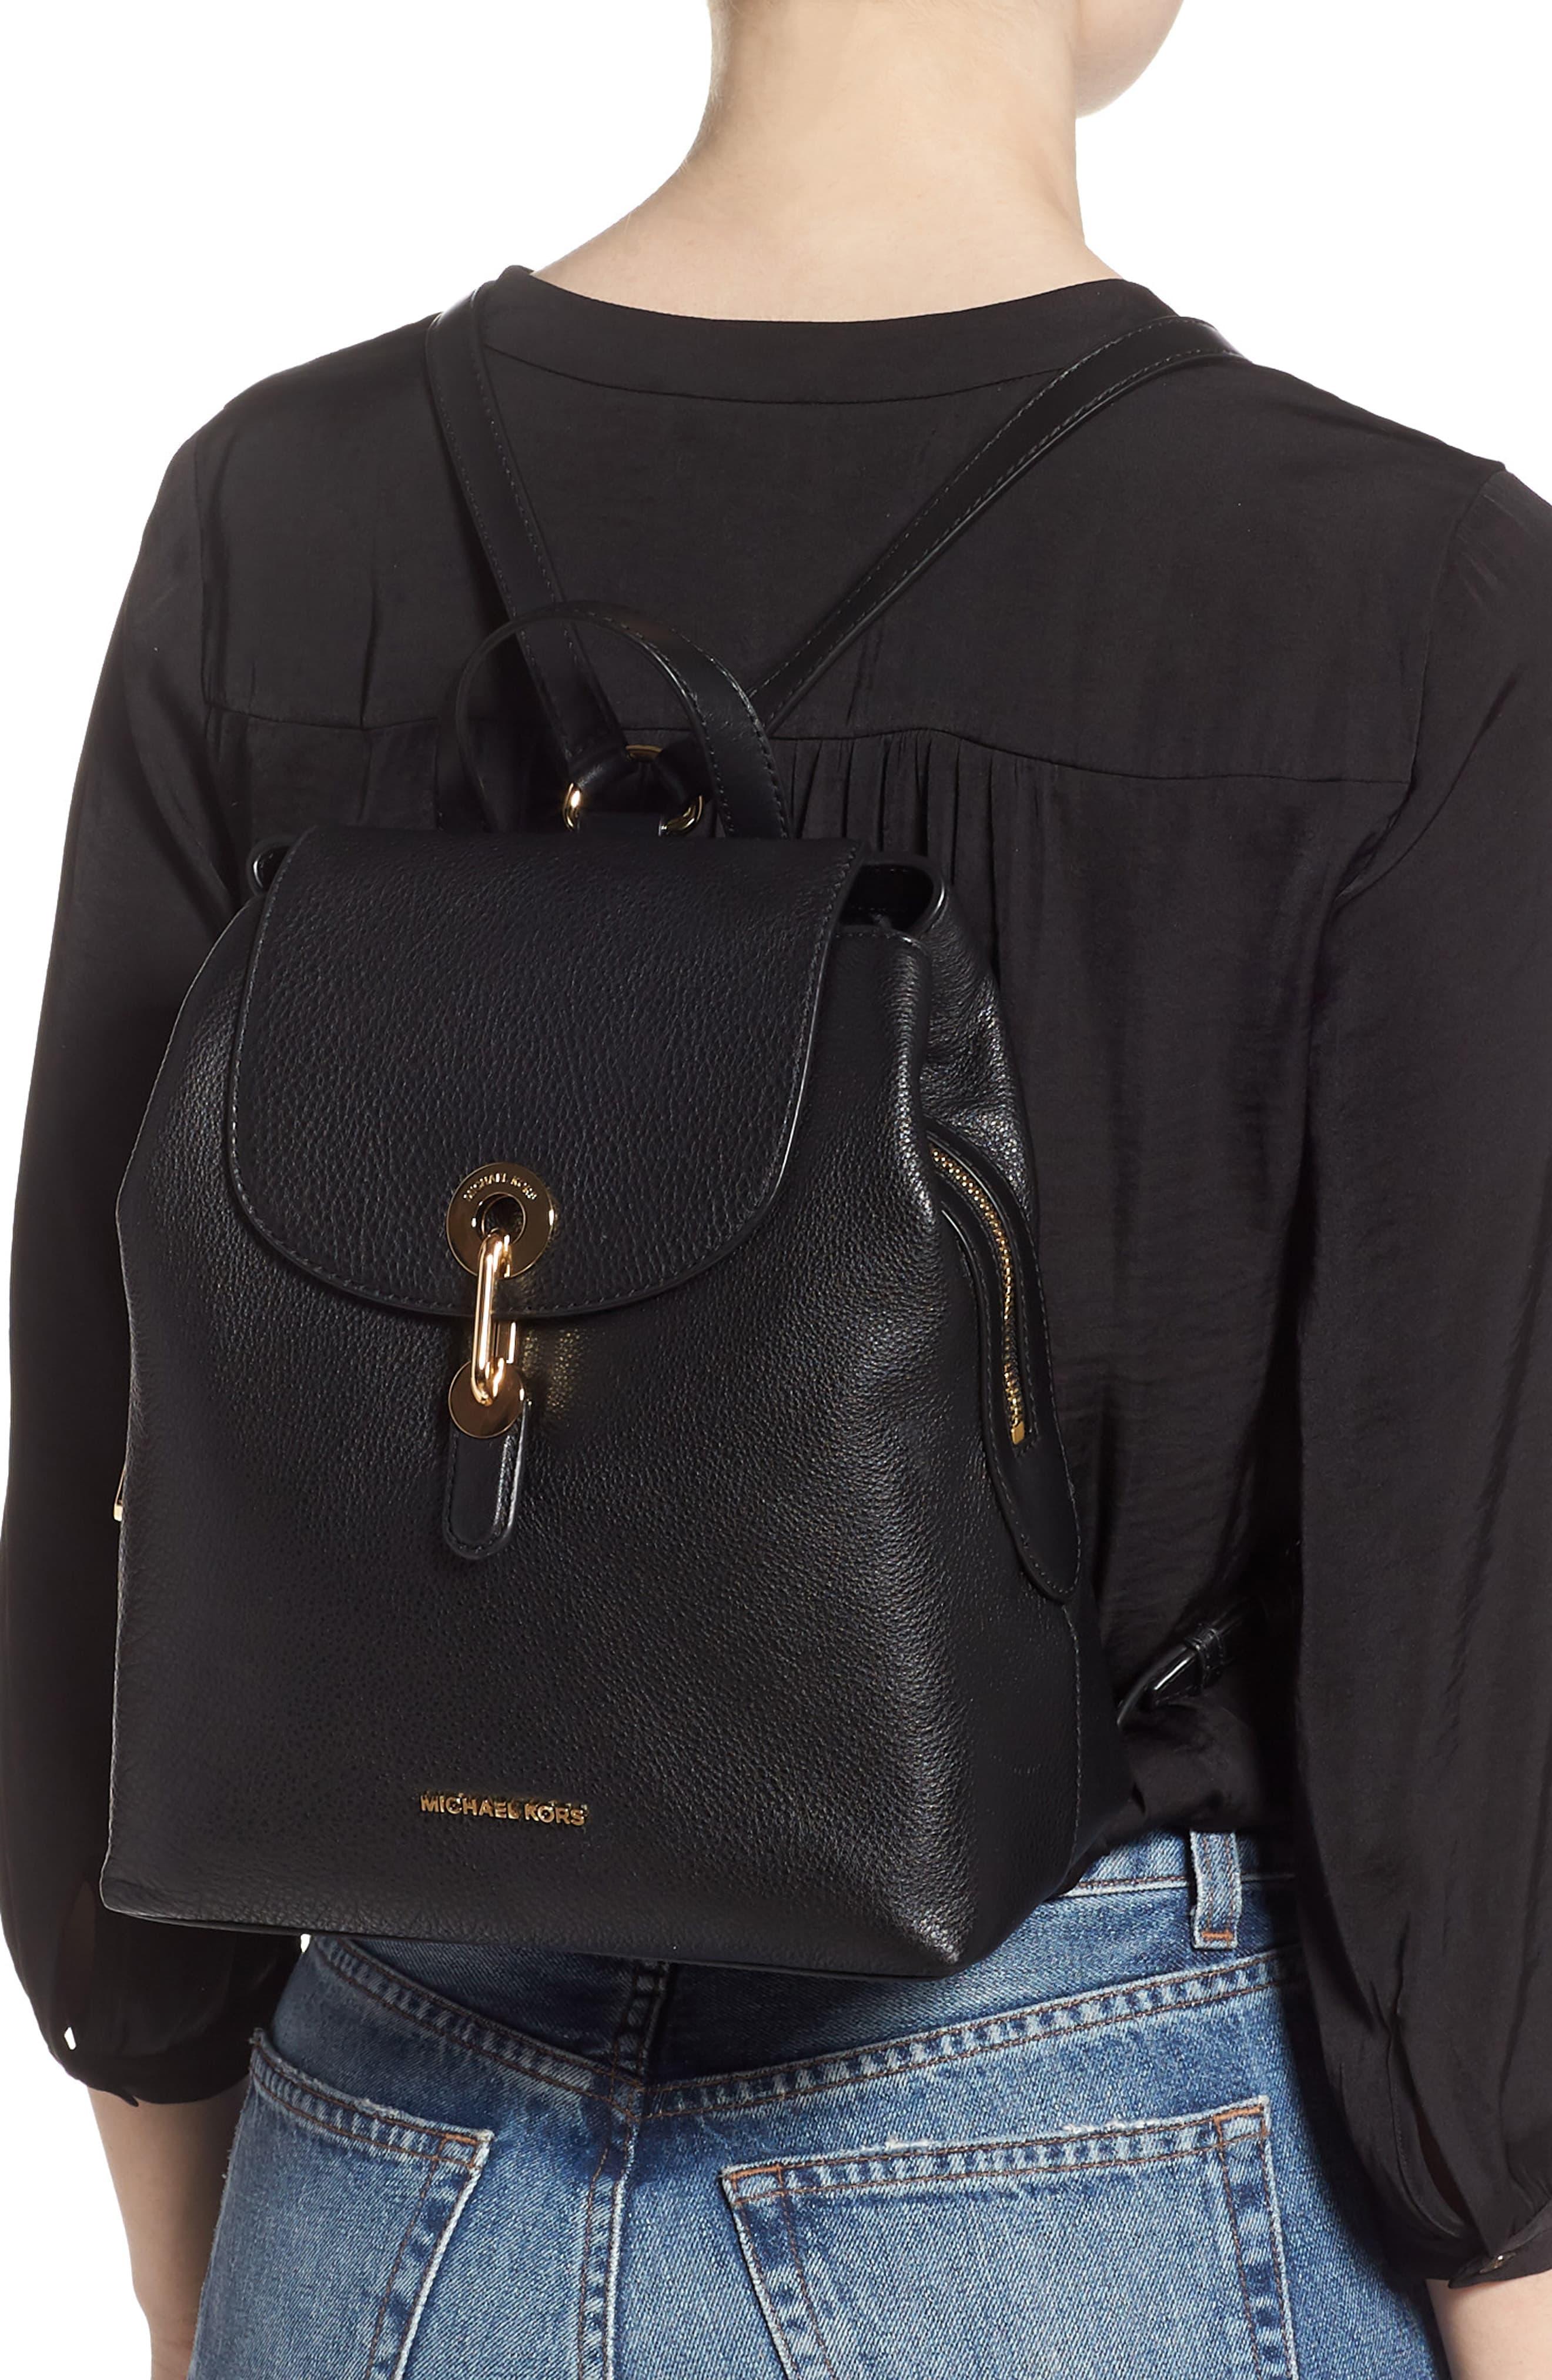 michael kors raven leather backpack